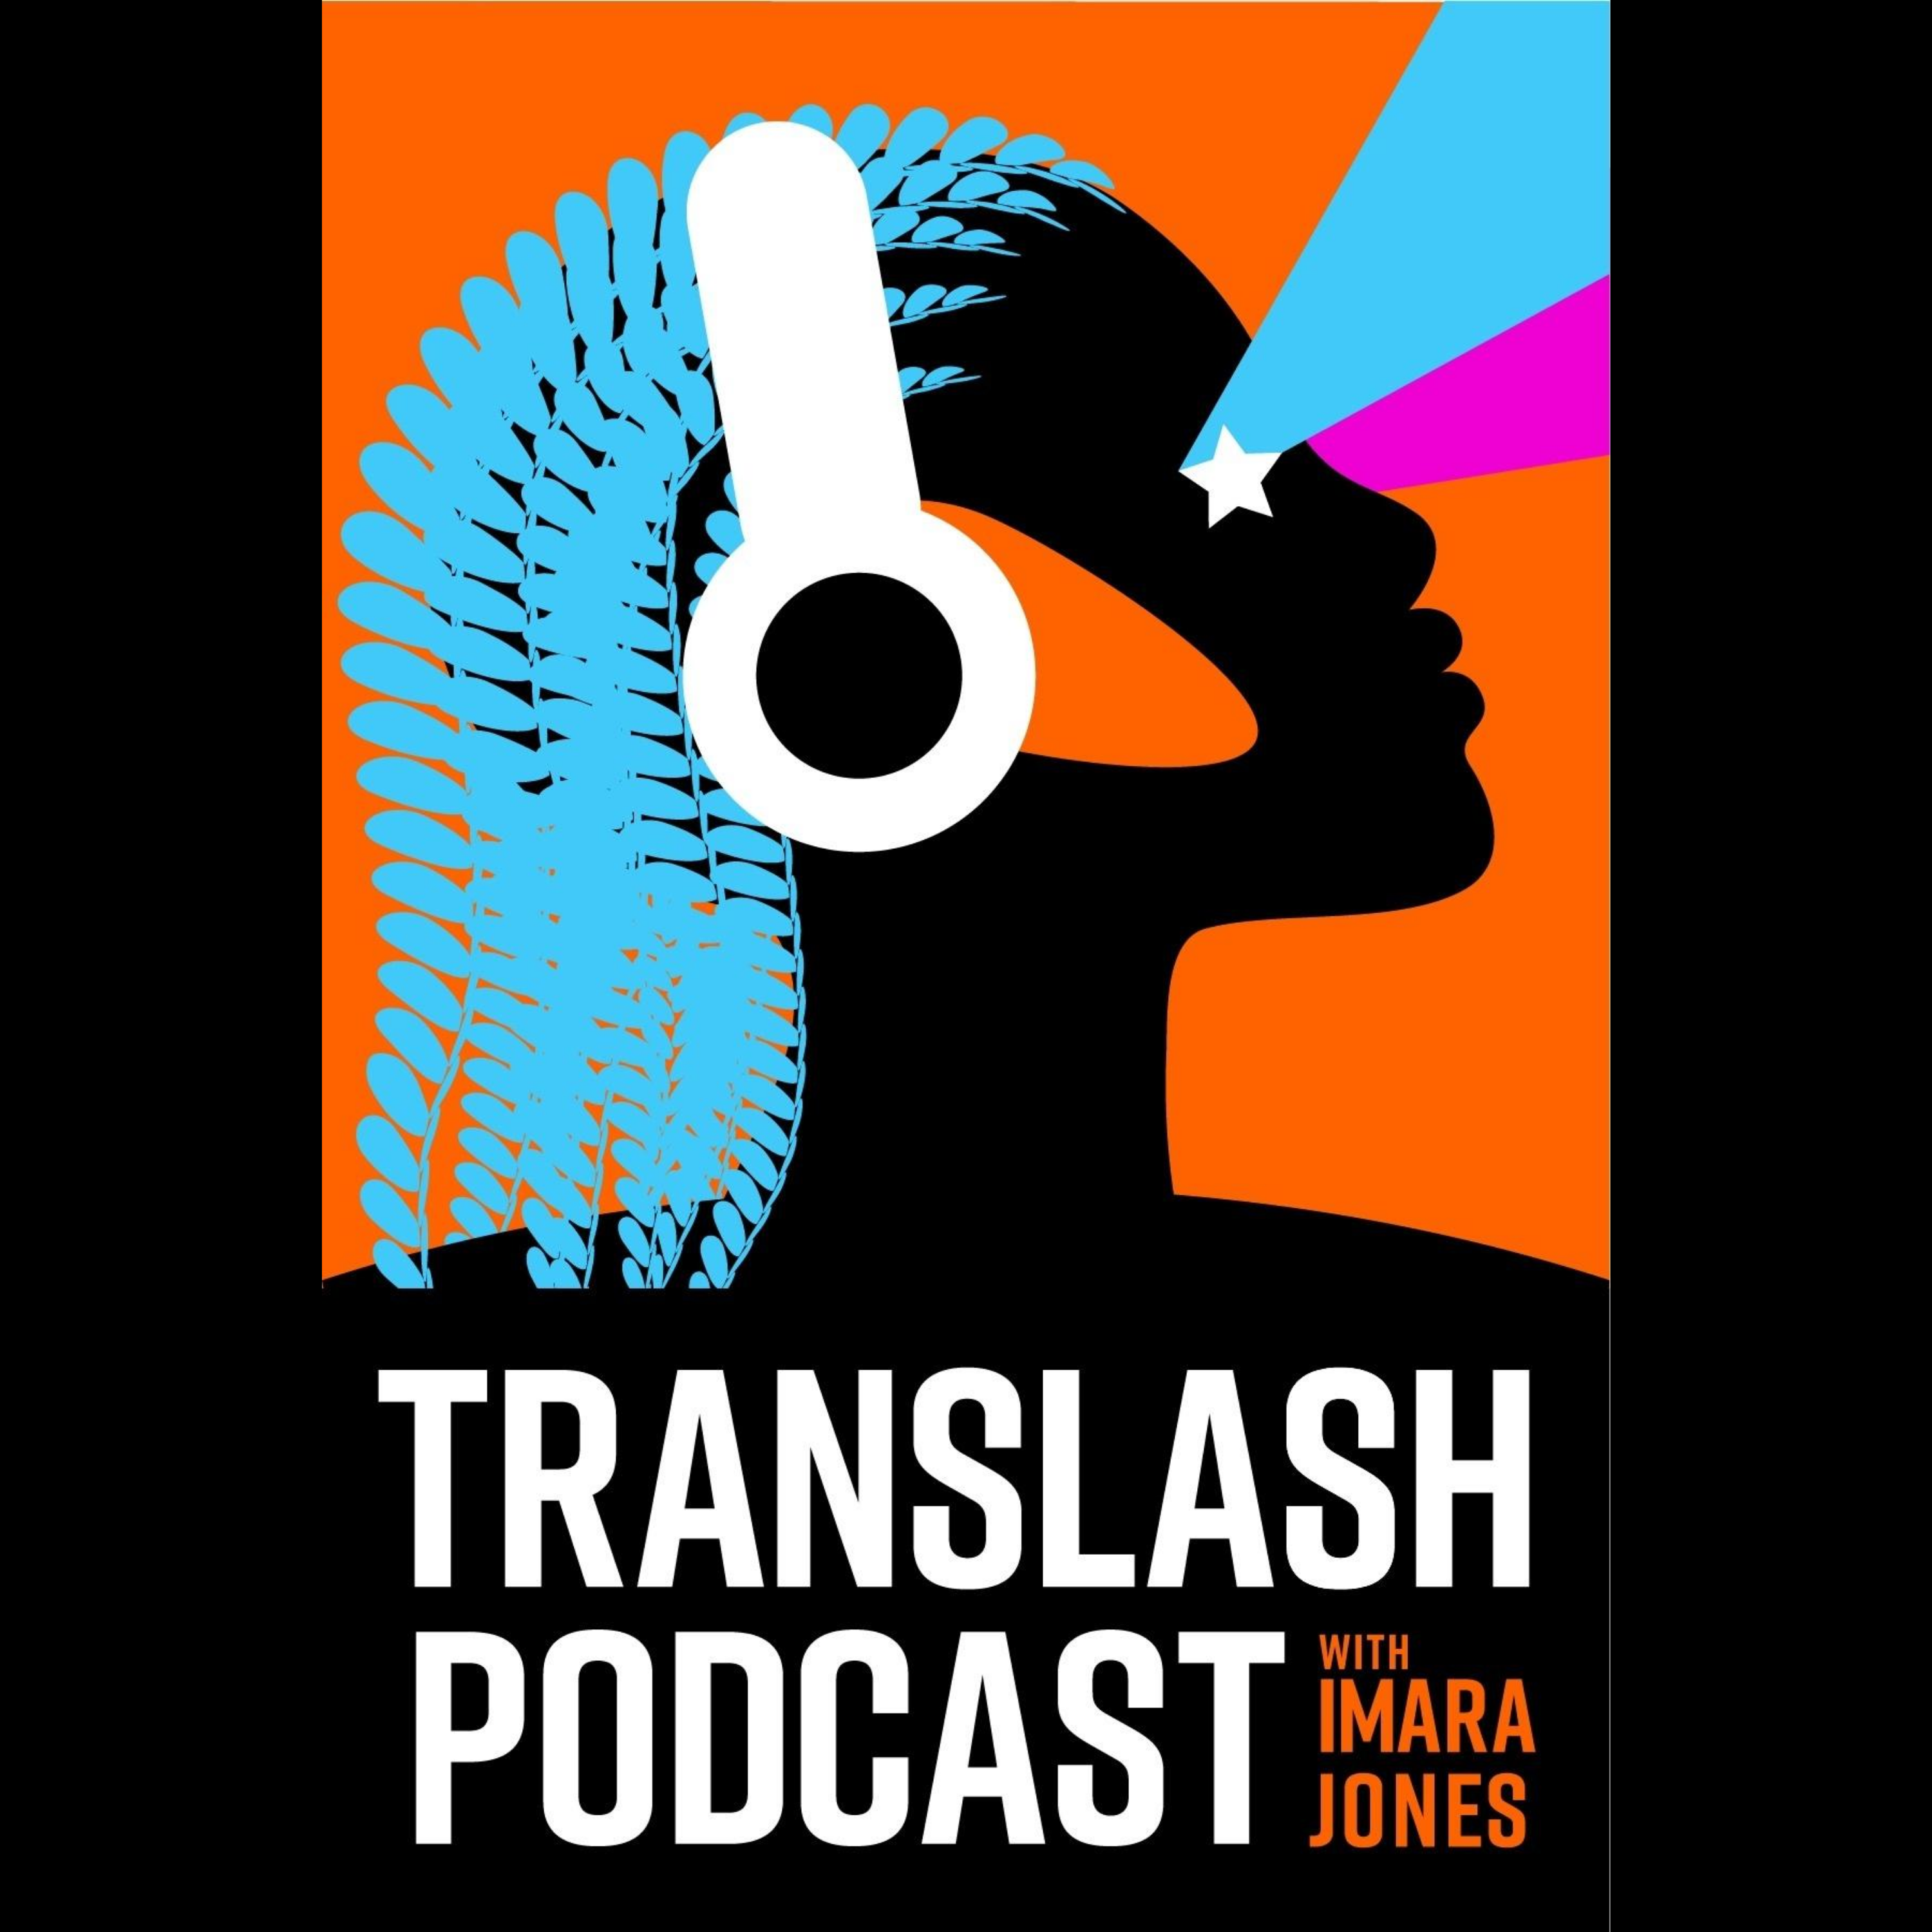 Introducing the TransLash Podcast with Imara Jones